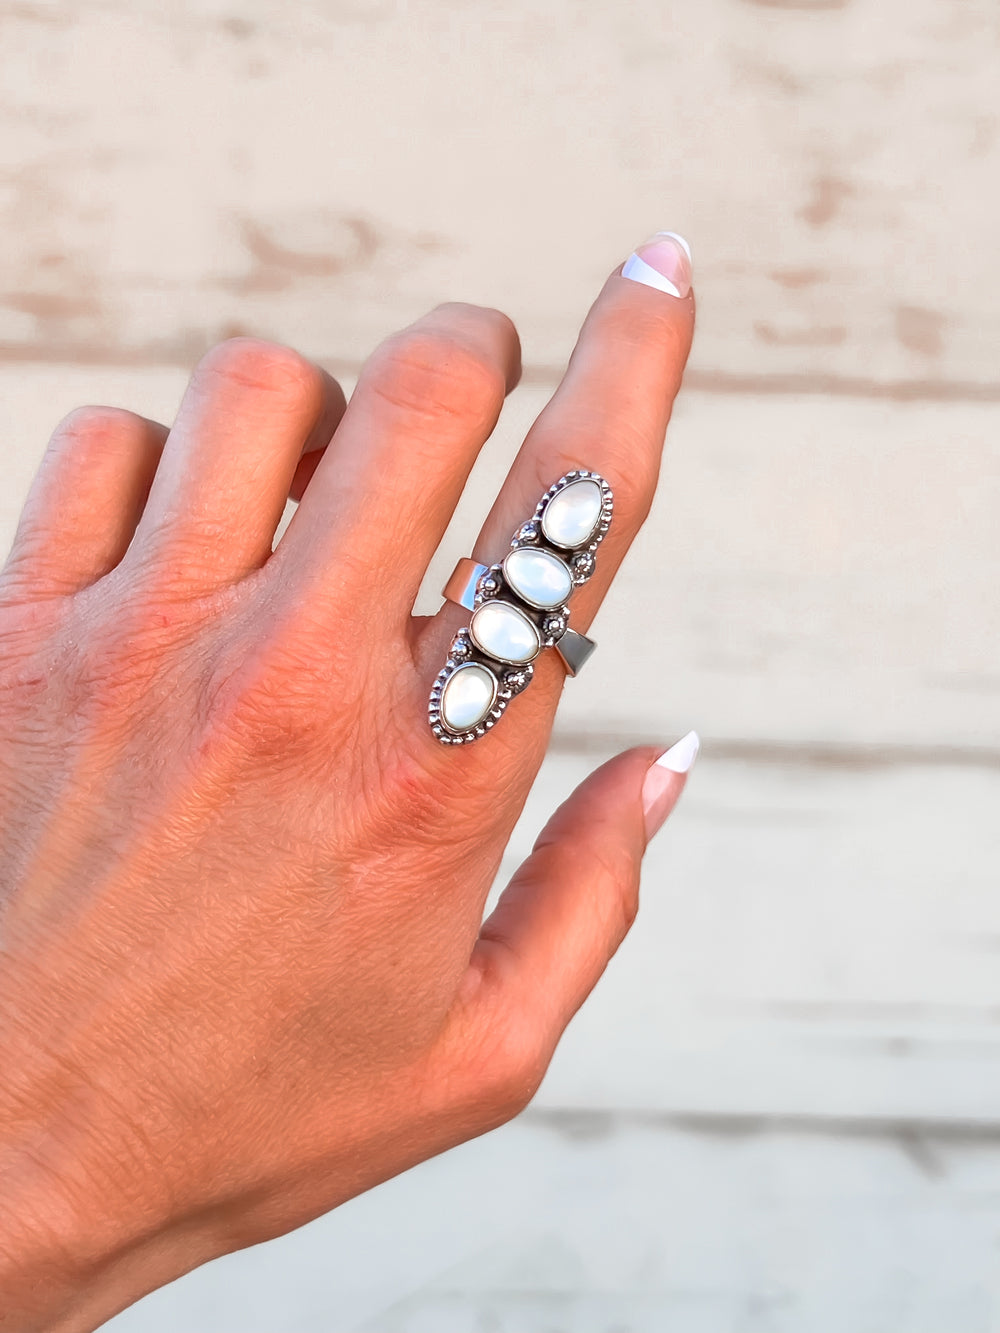 Stunning Stone Crawler Ring | Krush Exclusive!-Rings-Krush Kandy, Women's Online Fashion Boutique Located in Phoenix, Arizona (Scottsdale Area)